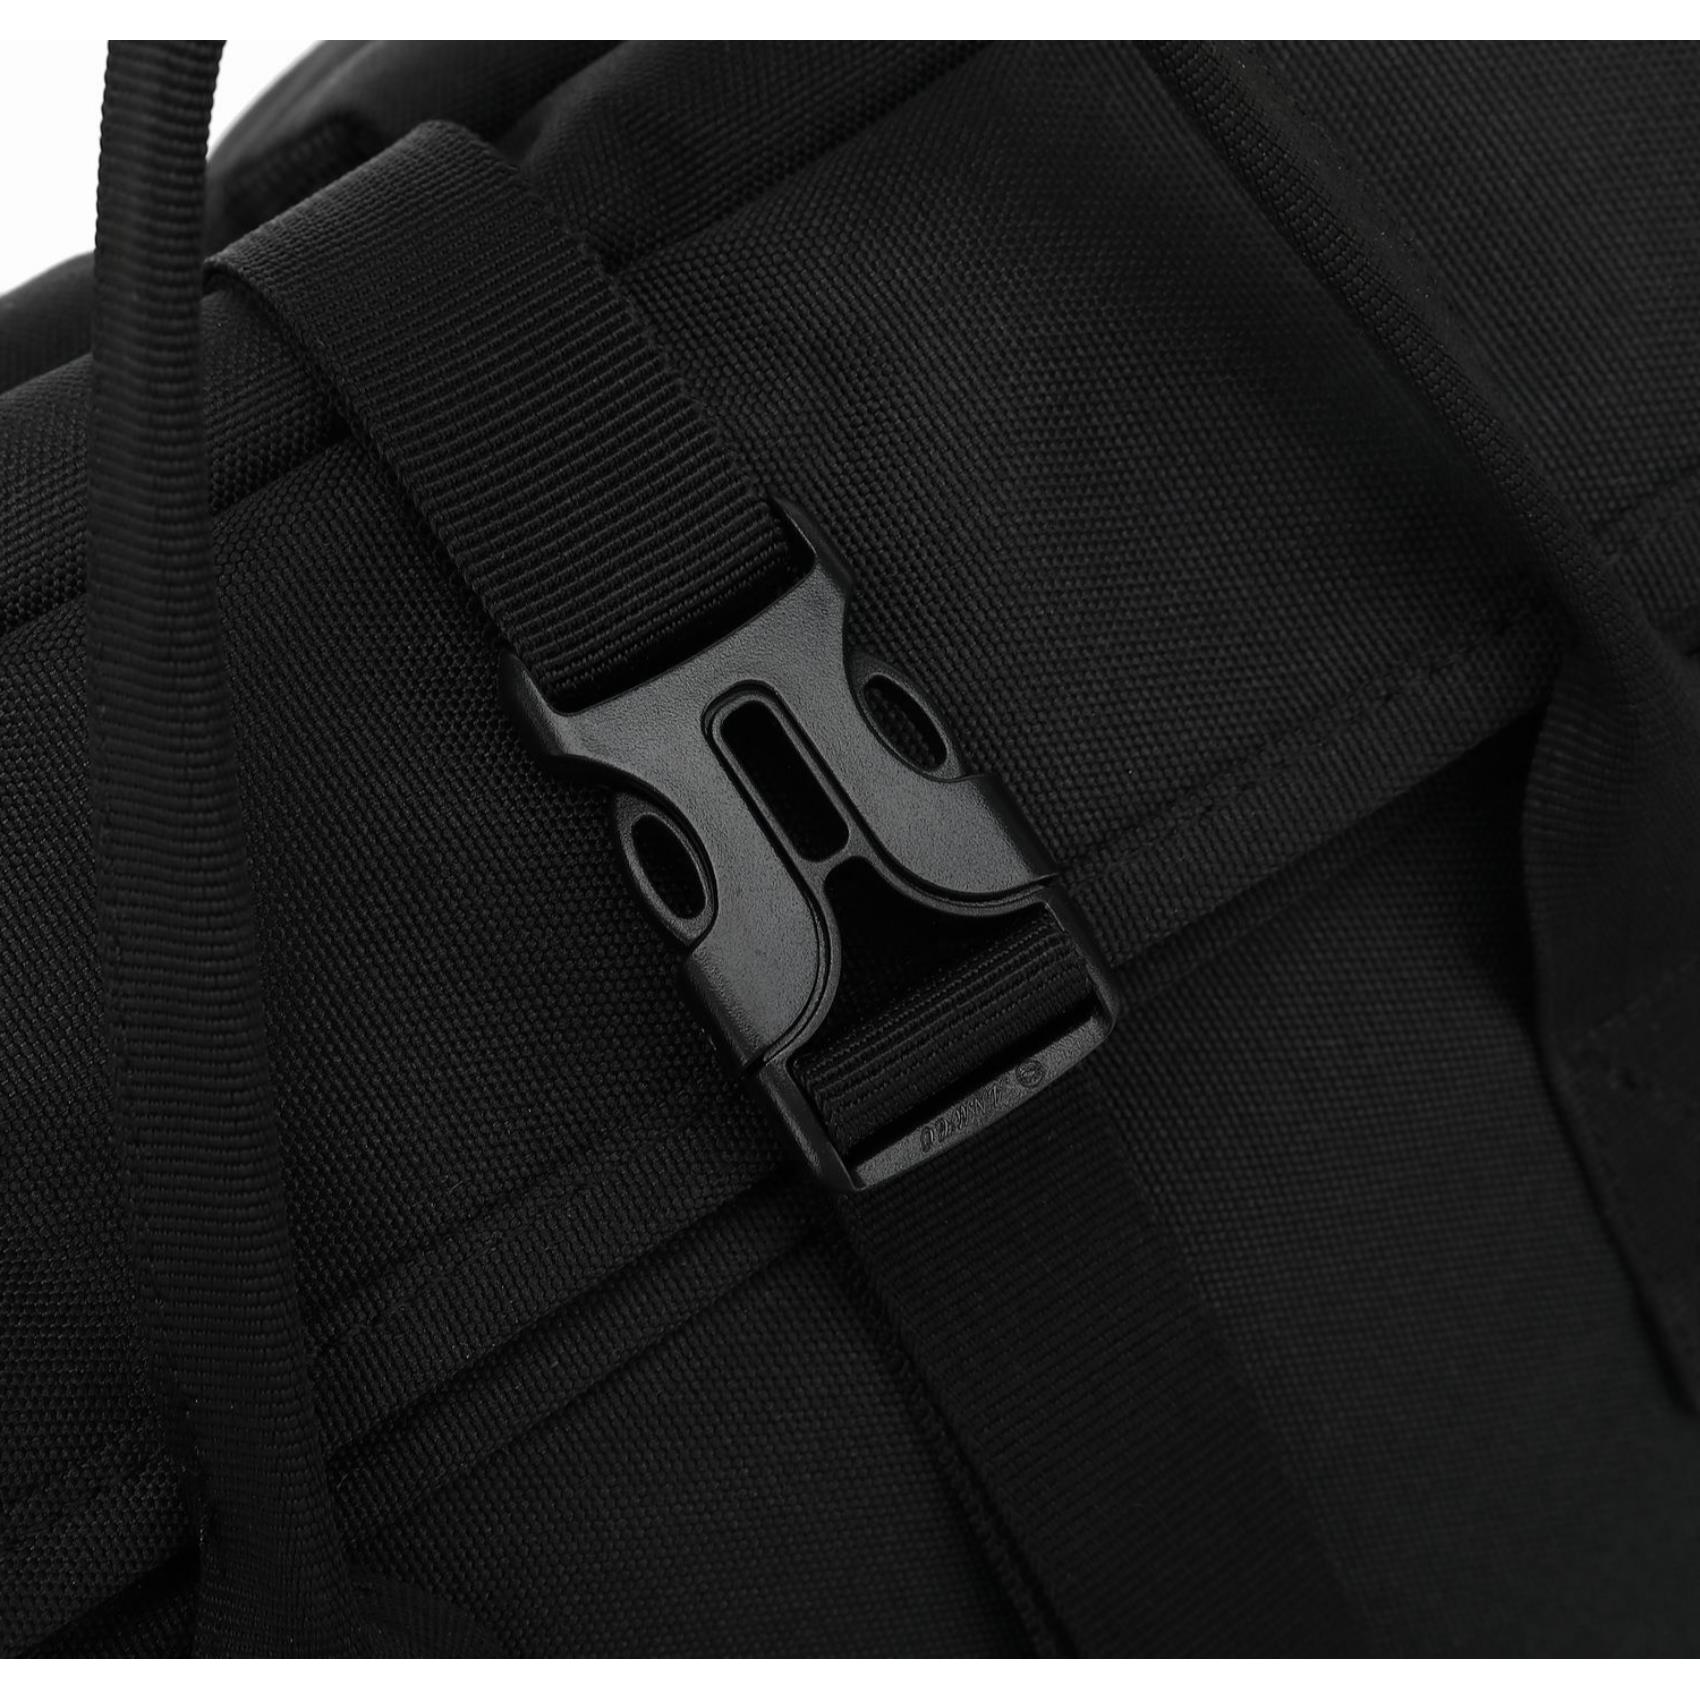 Backpack For Trips Black Celly Venturepackbk 8021735198185